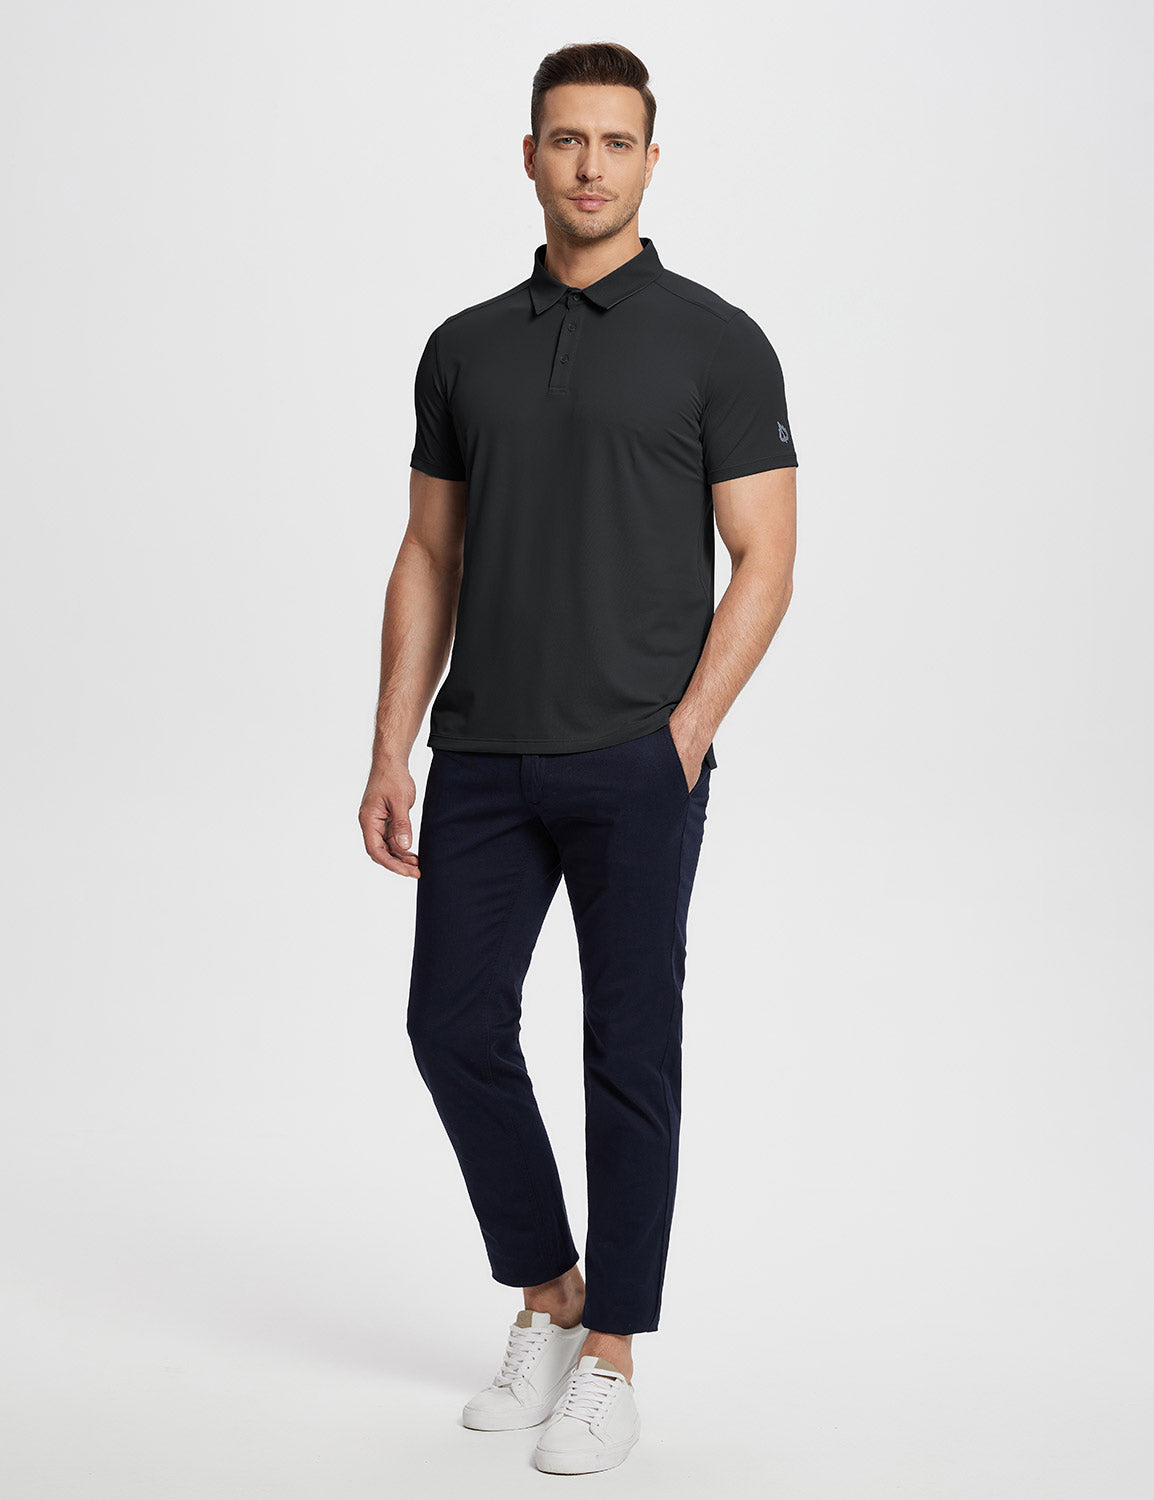 Baleaf Men's Laureate UPF50+ Golf Polo Shirt (Website Exclusive) dfa020 Jet Black Full